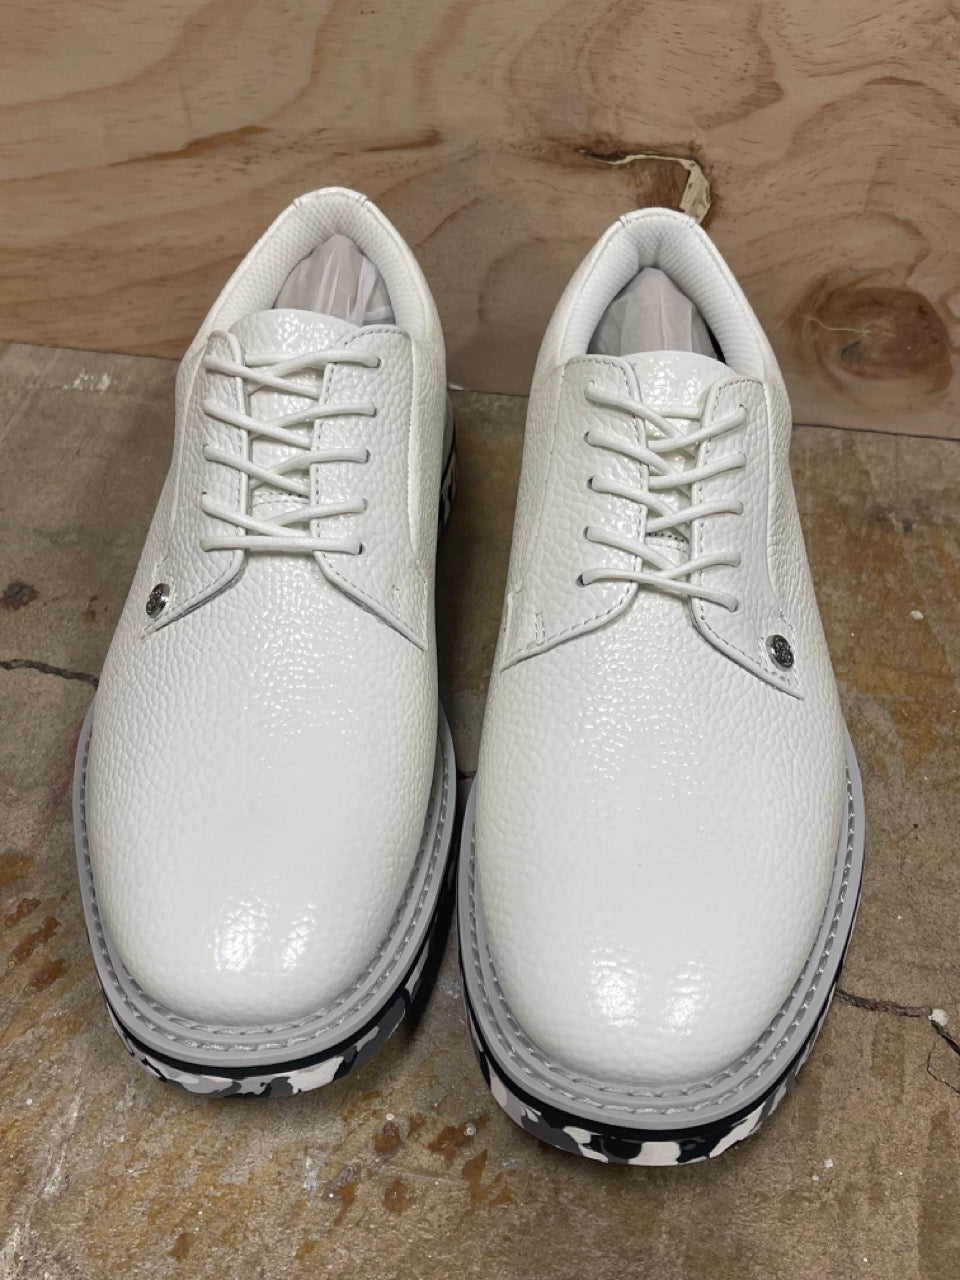 GFORE Men's Limited Edition Camo Gallivanter Golf Shoes